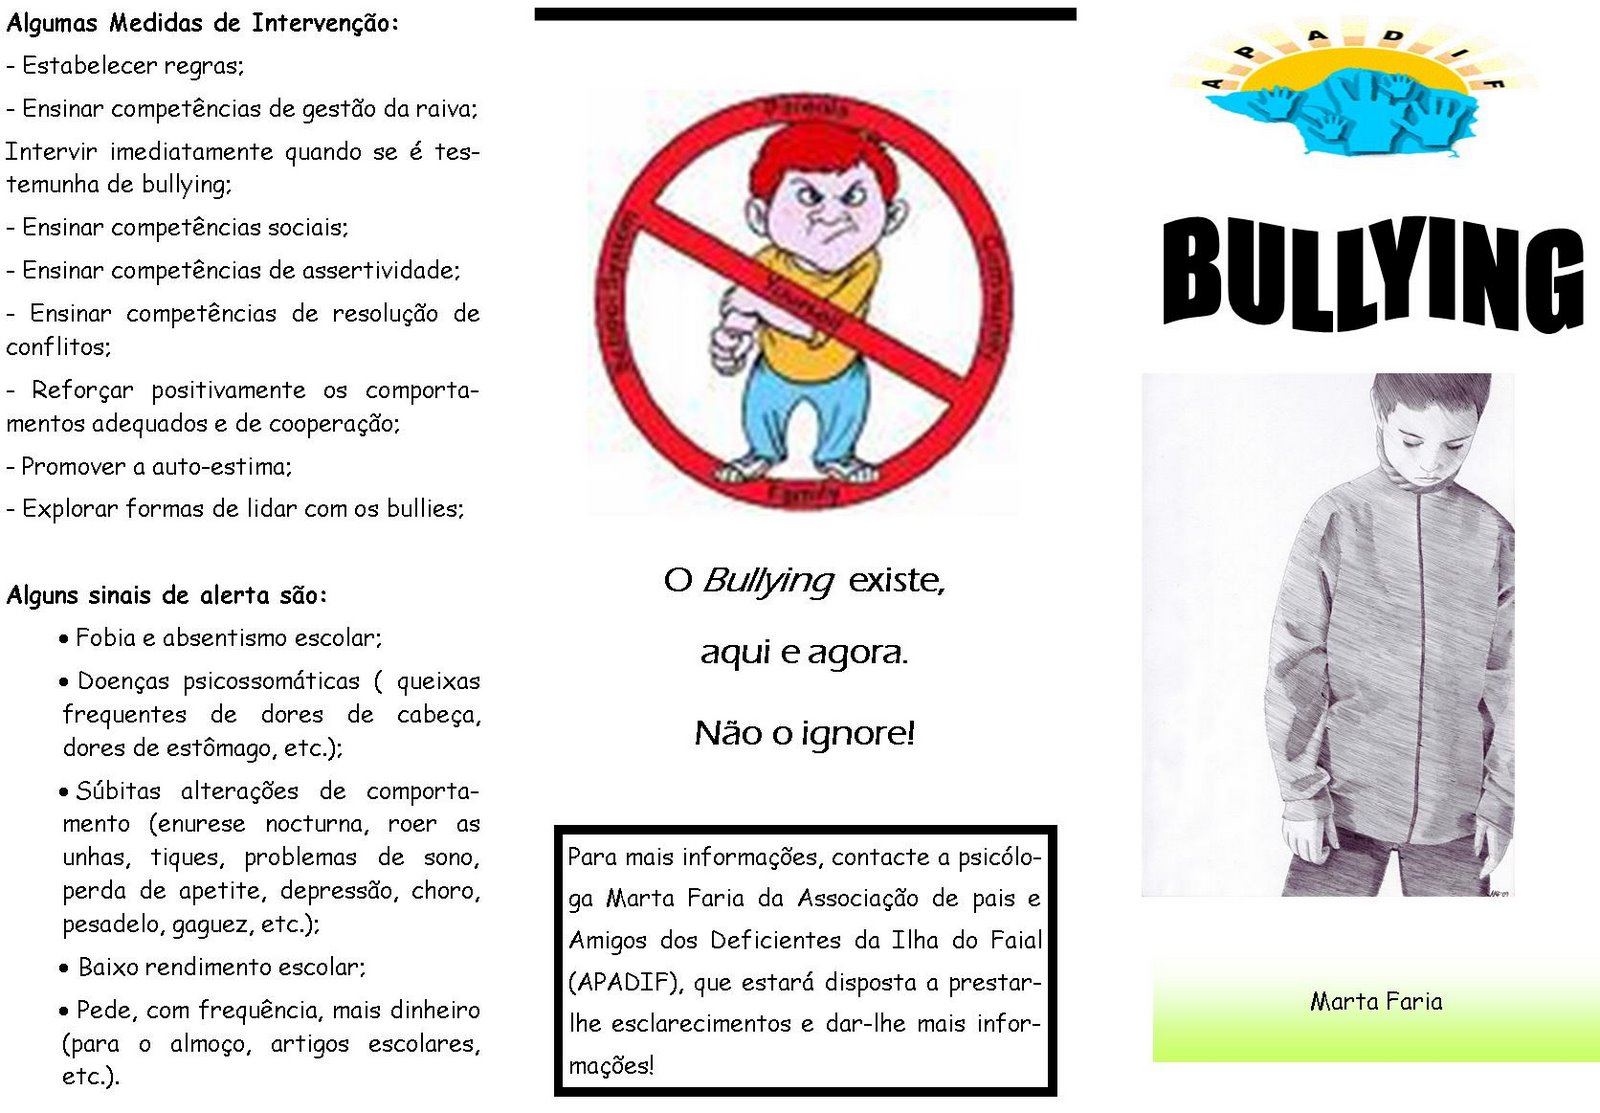 [bullying1.jpg]